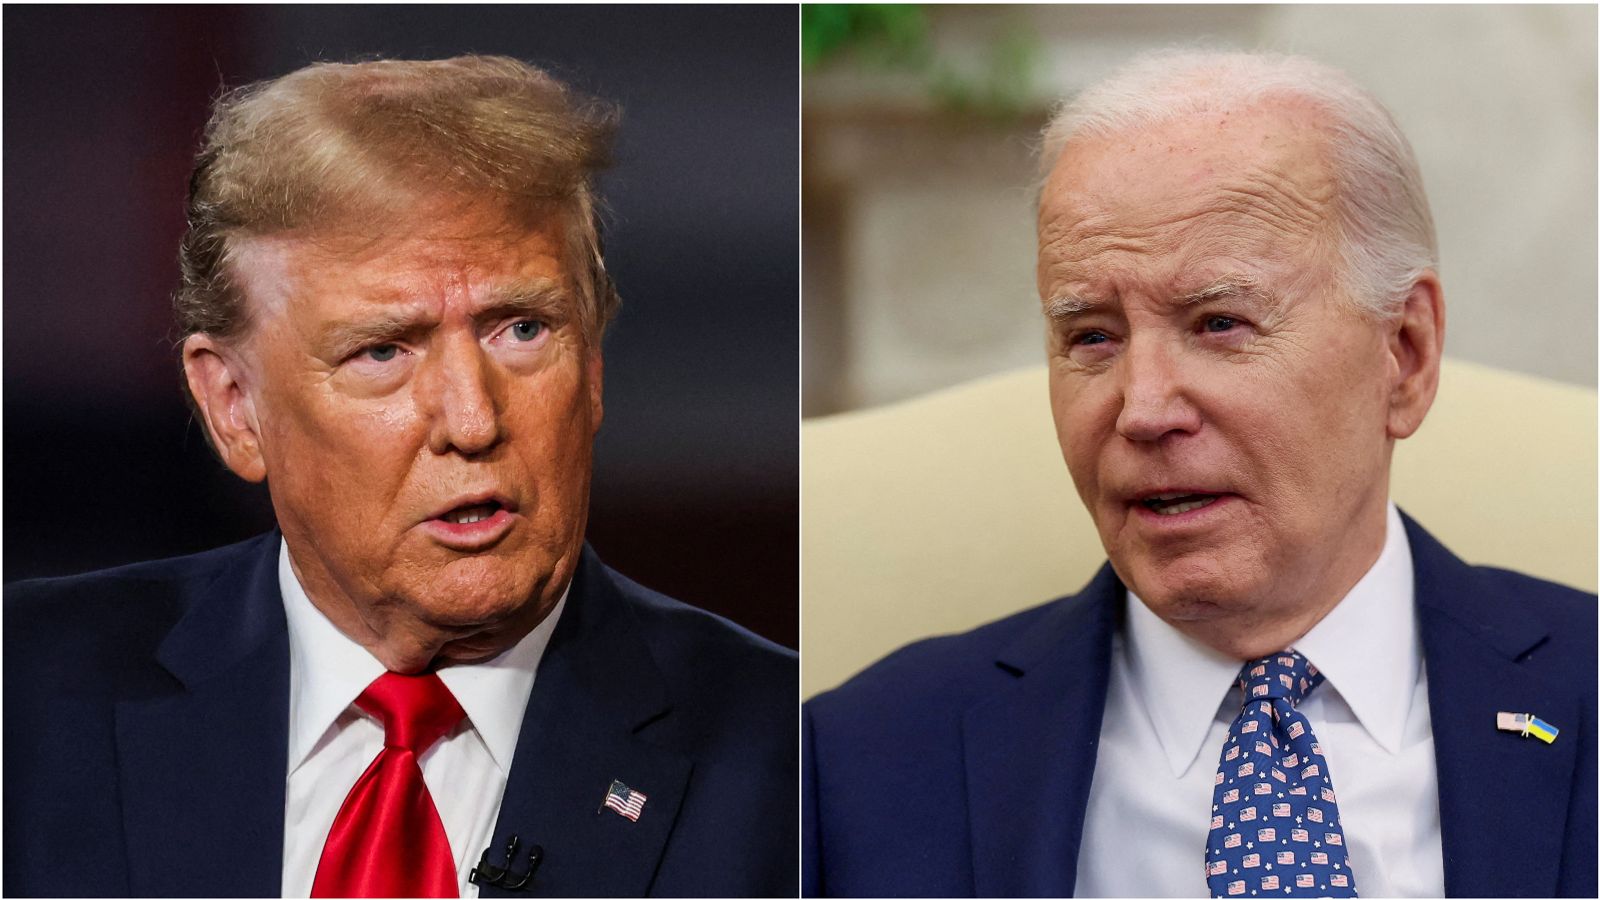 Joe Biden and Donald Trump agree on two head-to-head television debates